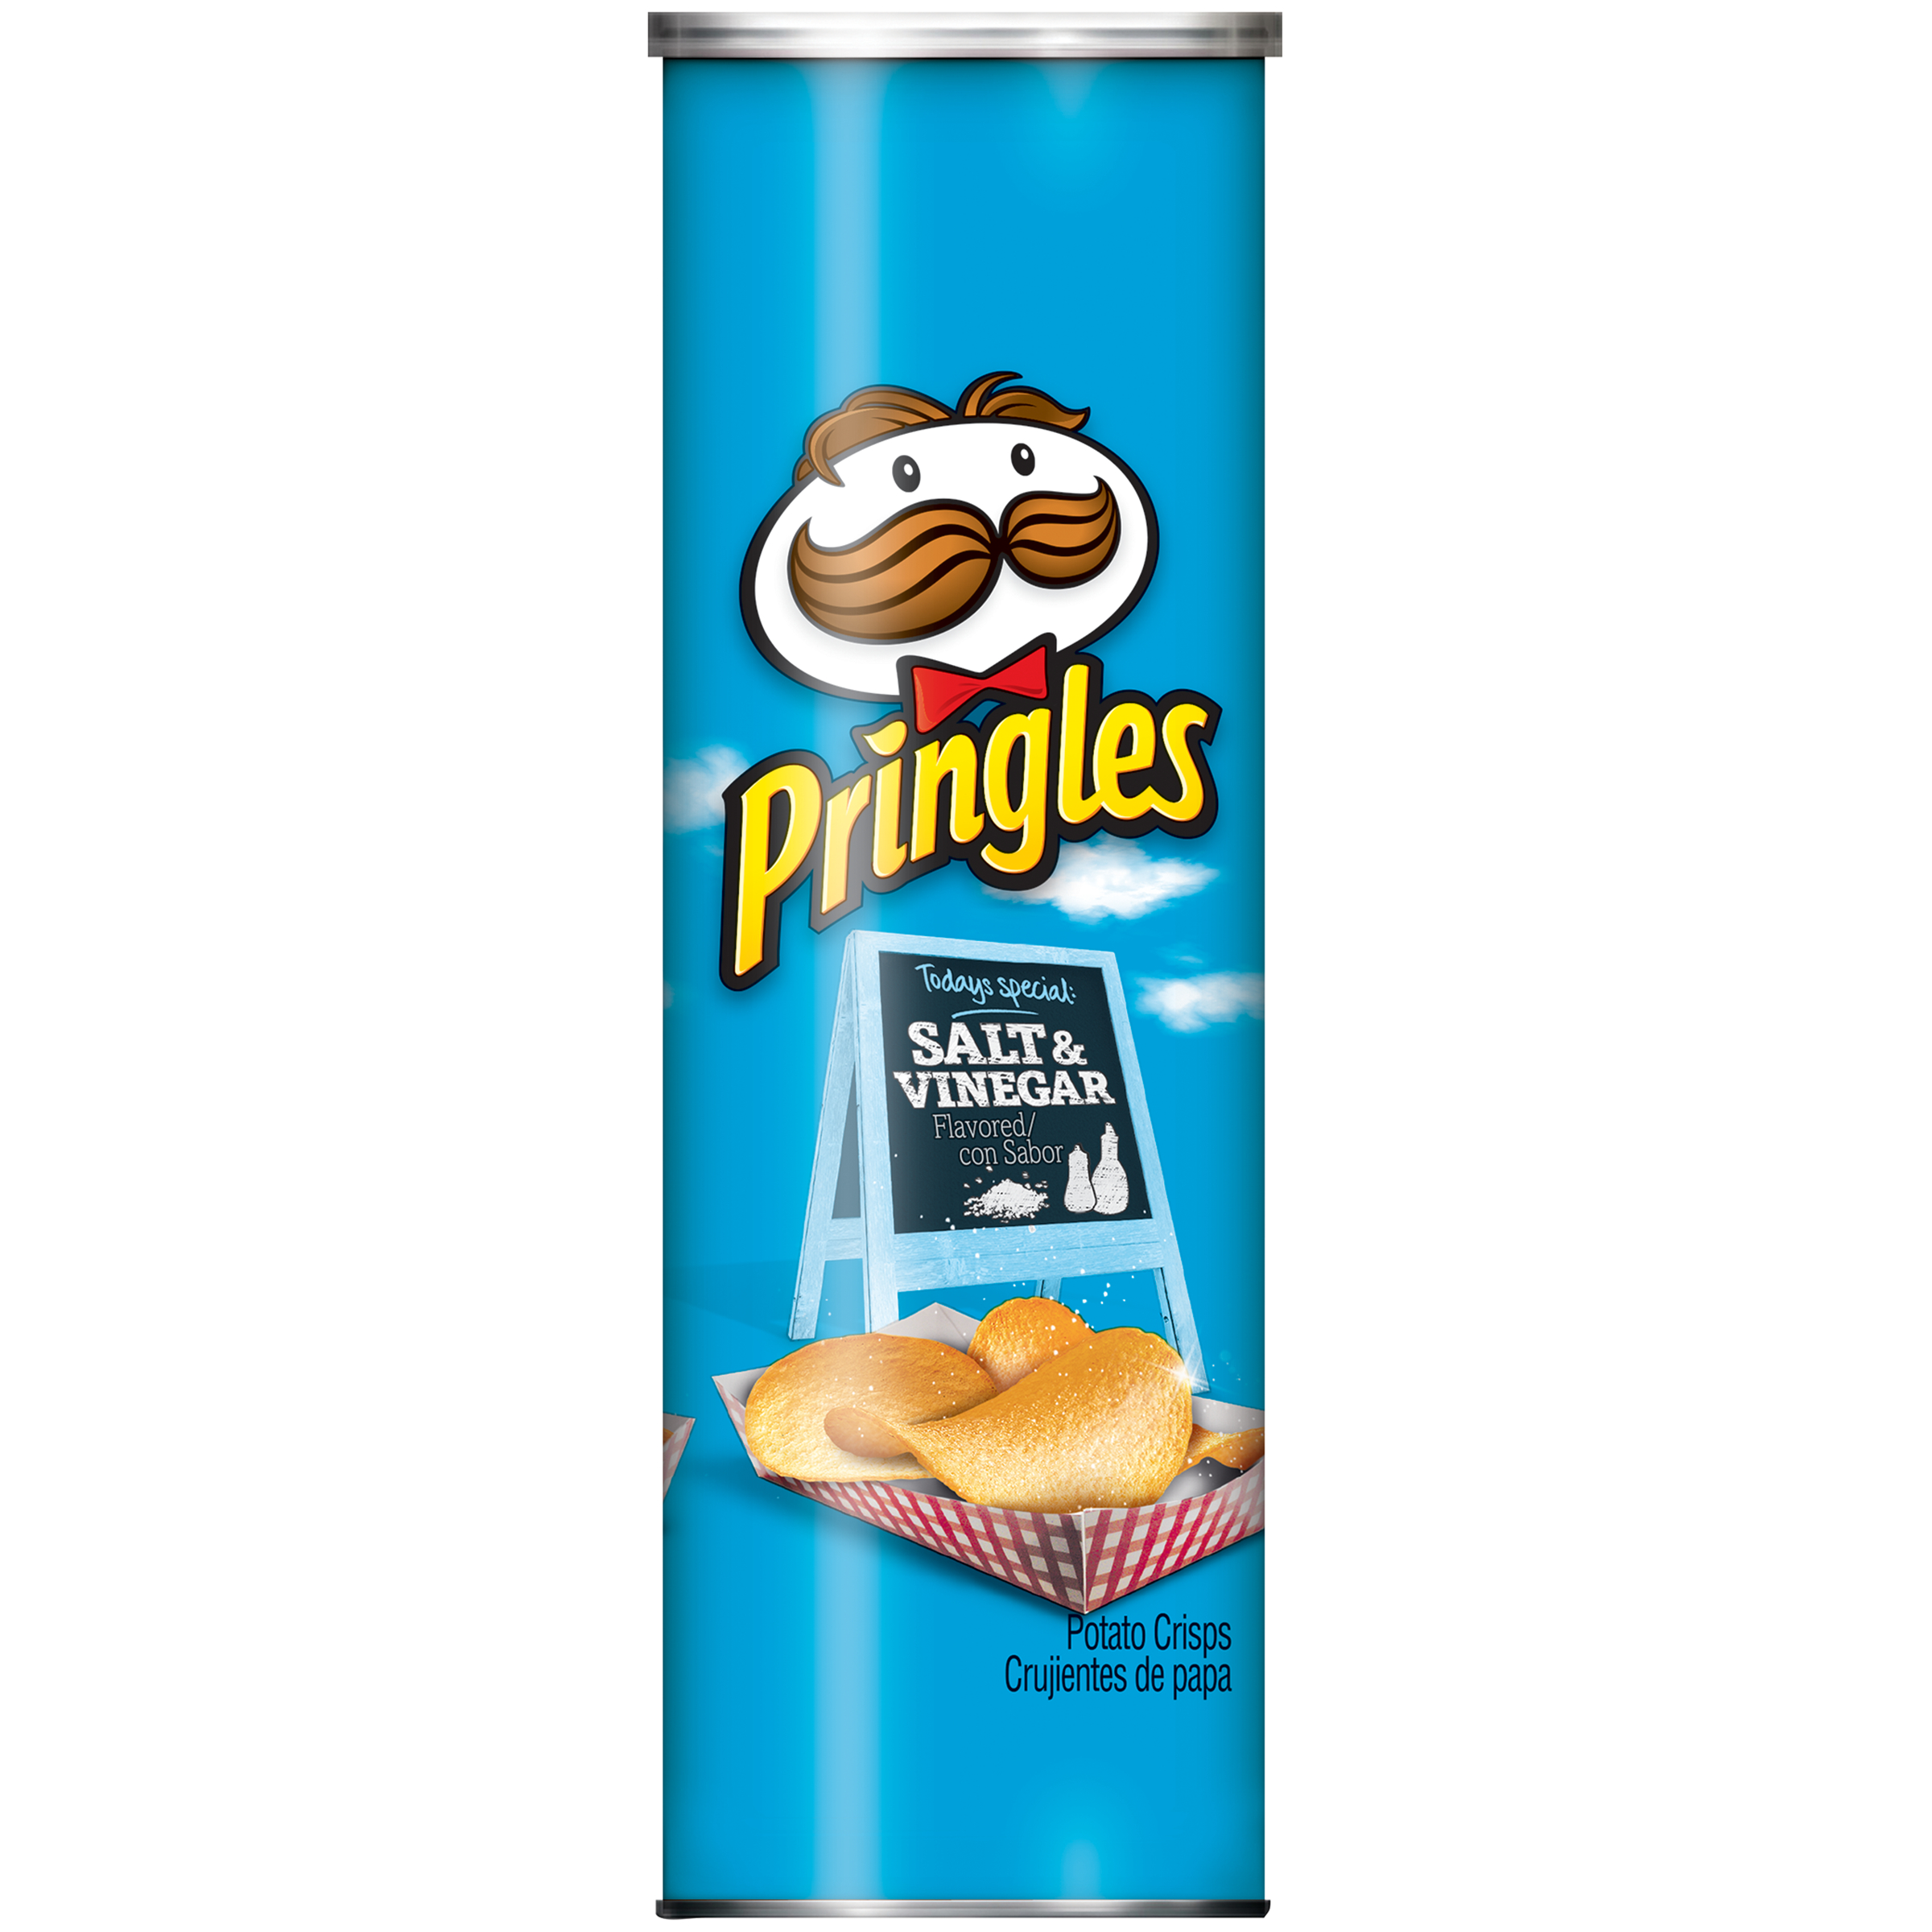 Pringles " Potato Crisps Chips, Salt and Vinegar Flavored, 5.5 oz Can "